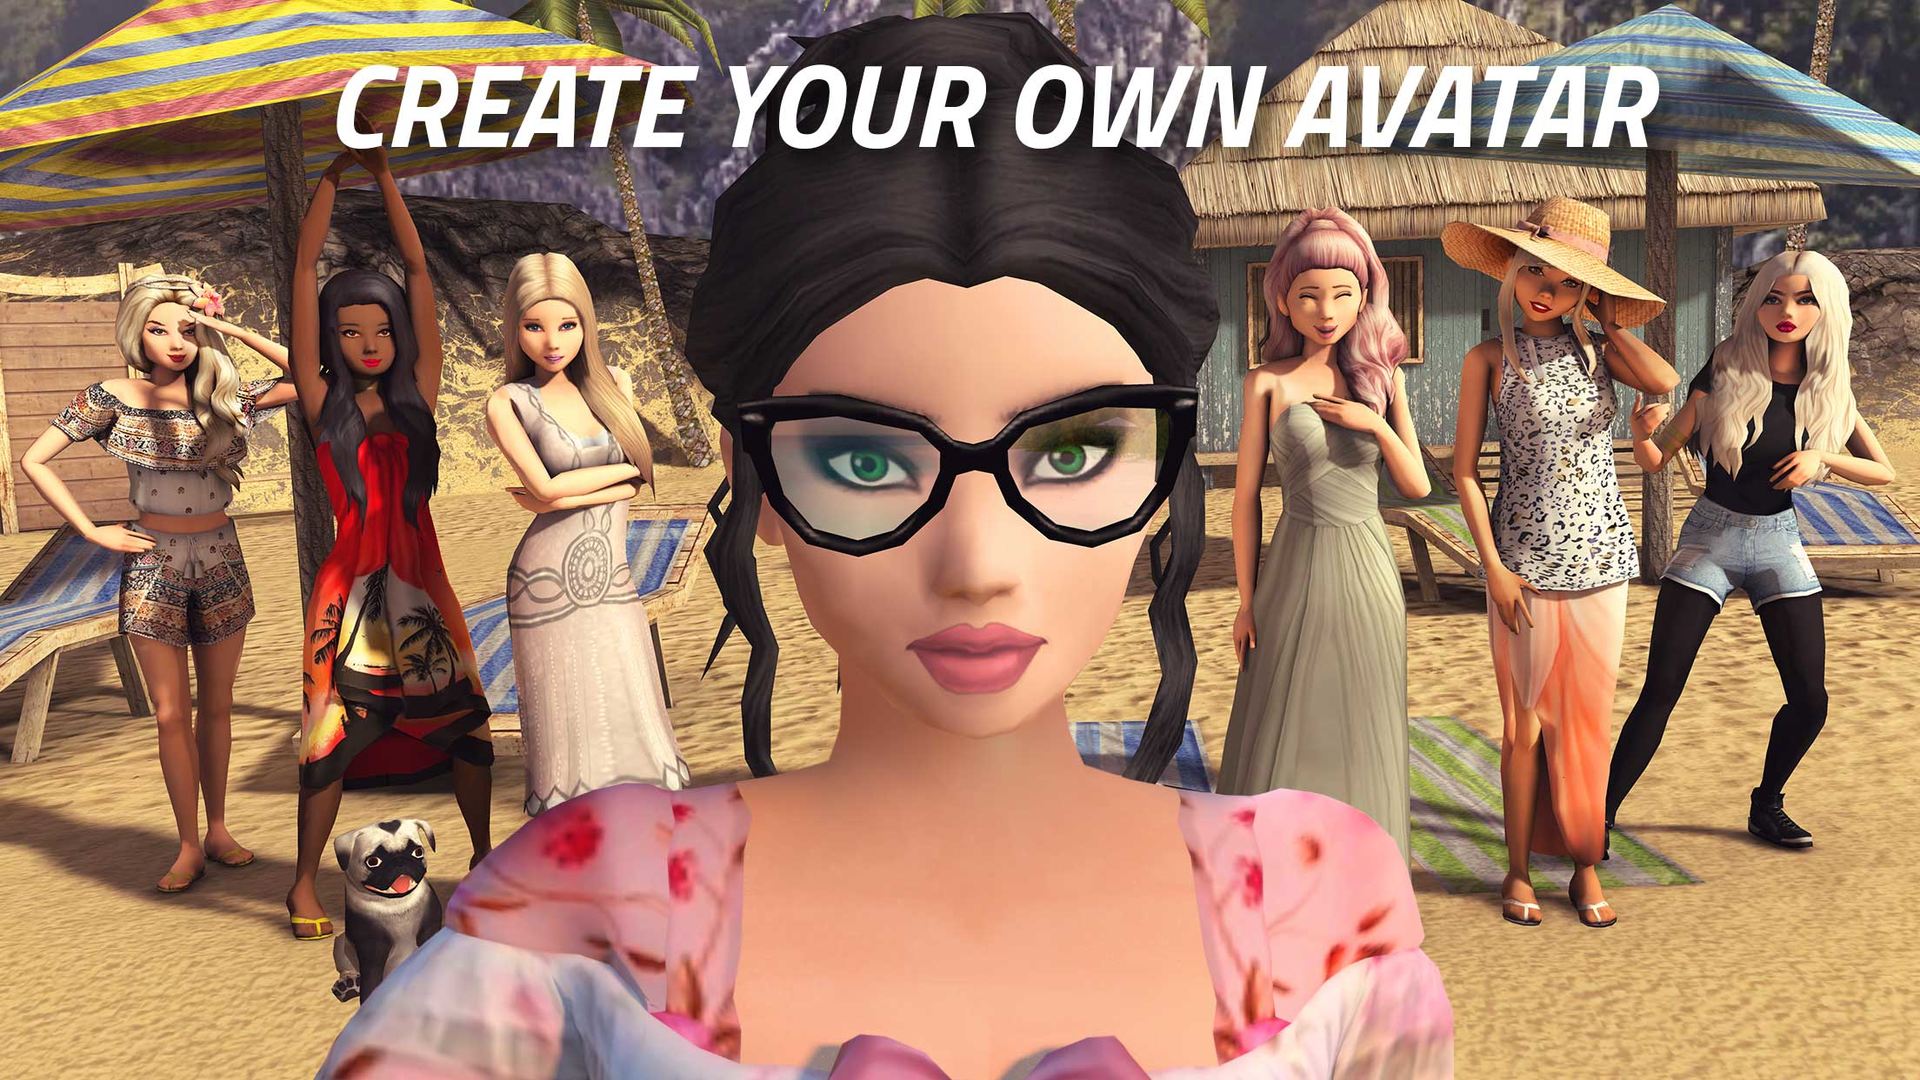 Screenshot of Avakin Life - 3D Virtual World